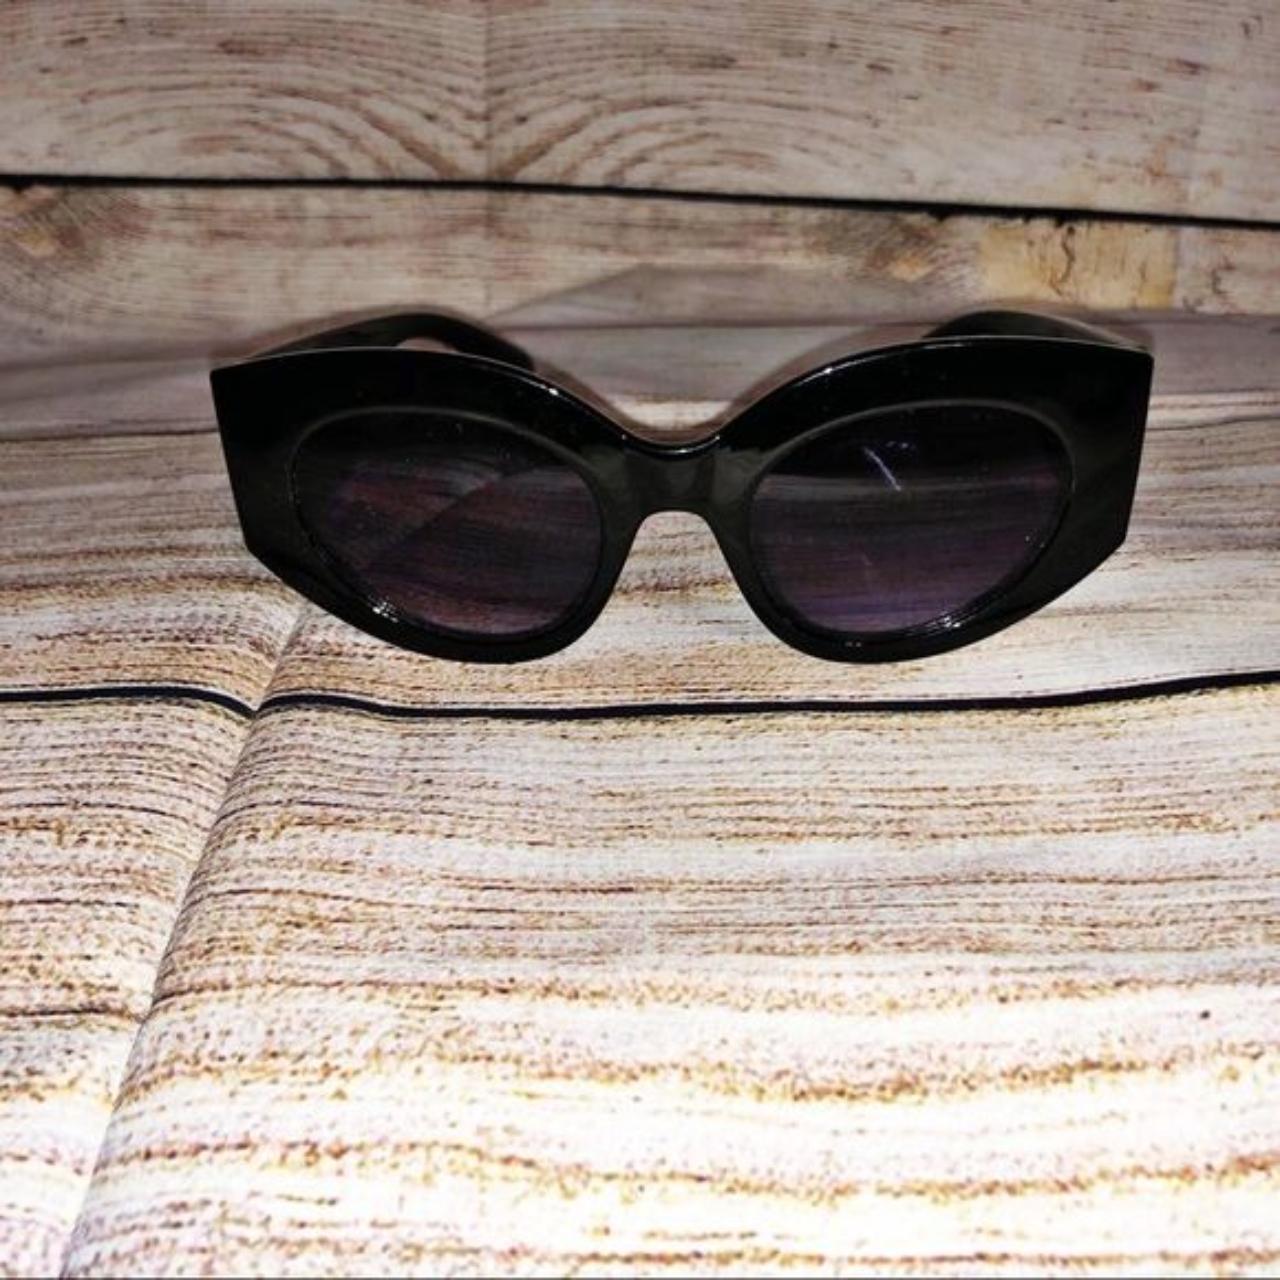 Product Image 1 - A.J. Morgan Black Flattery Sunglasses.
Black